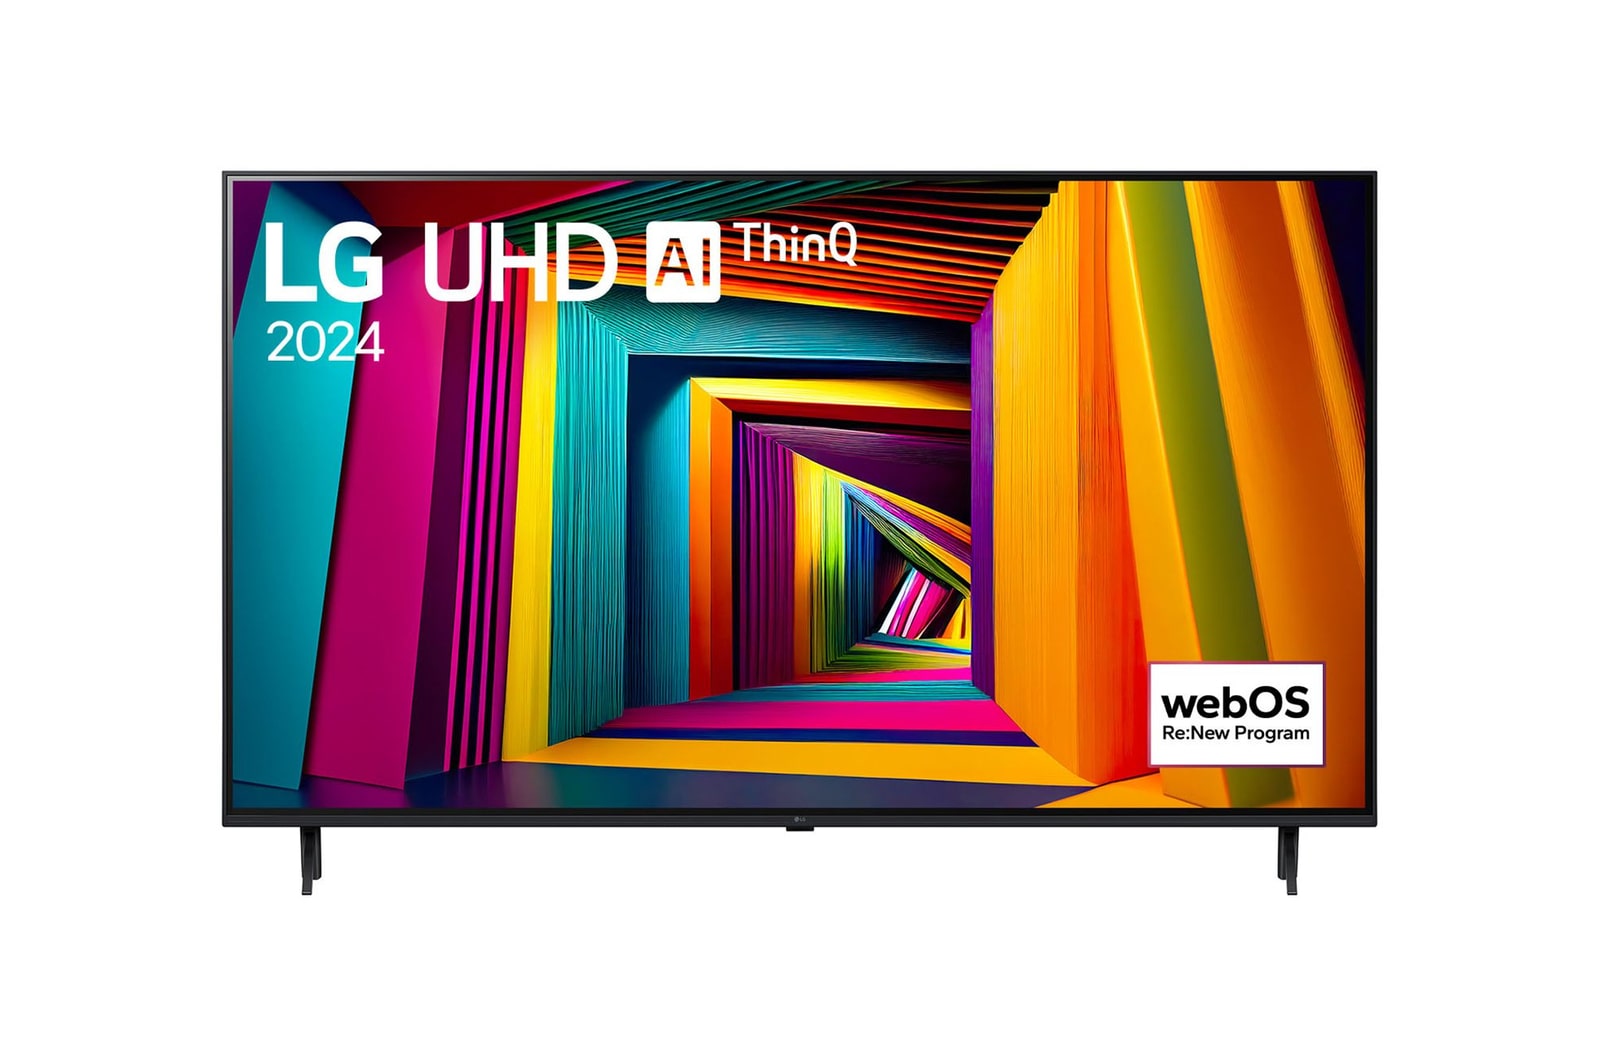 LG UHD 4K 智能電視 UT90 的正面圖，螢幕上顯示文字「LG UHD AI ThinQ, 2024」和 webOS Re:New 計劃標誌